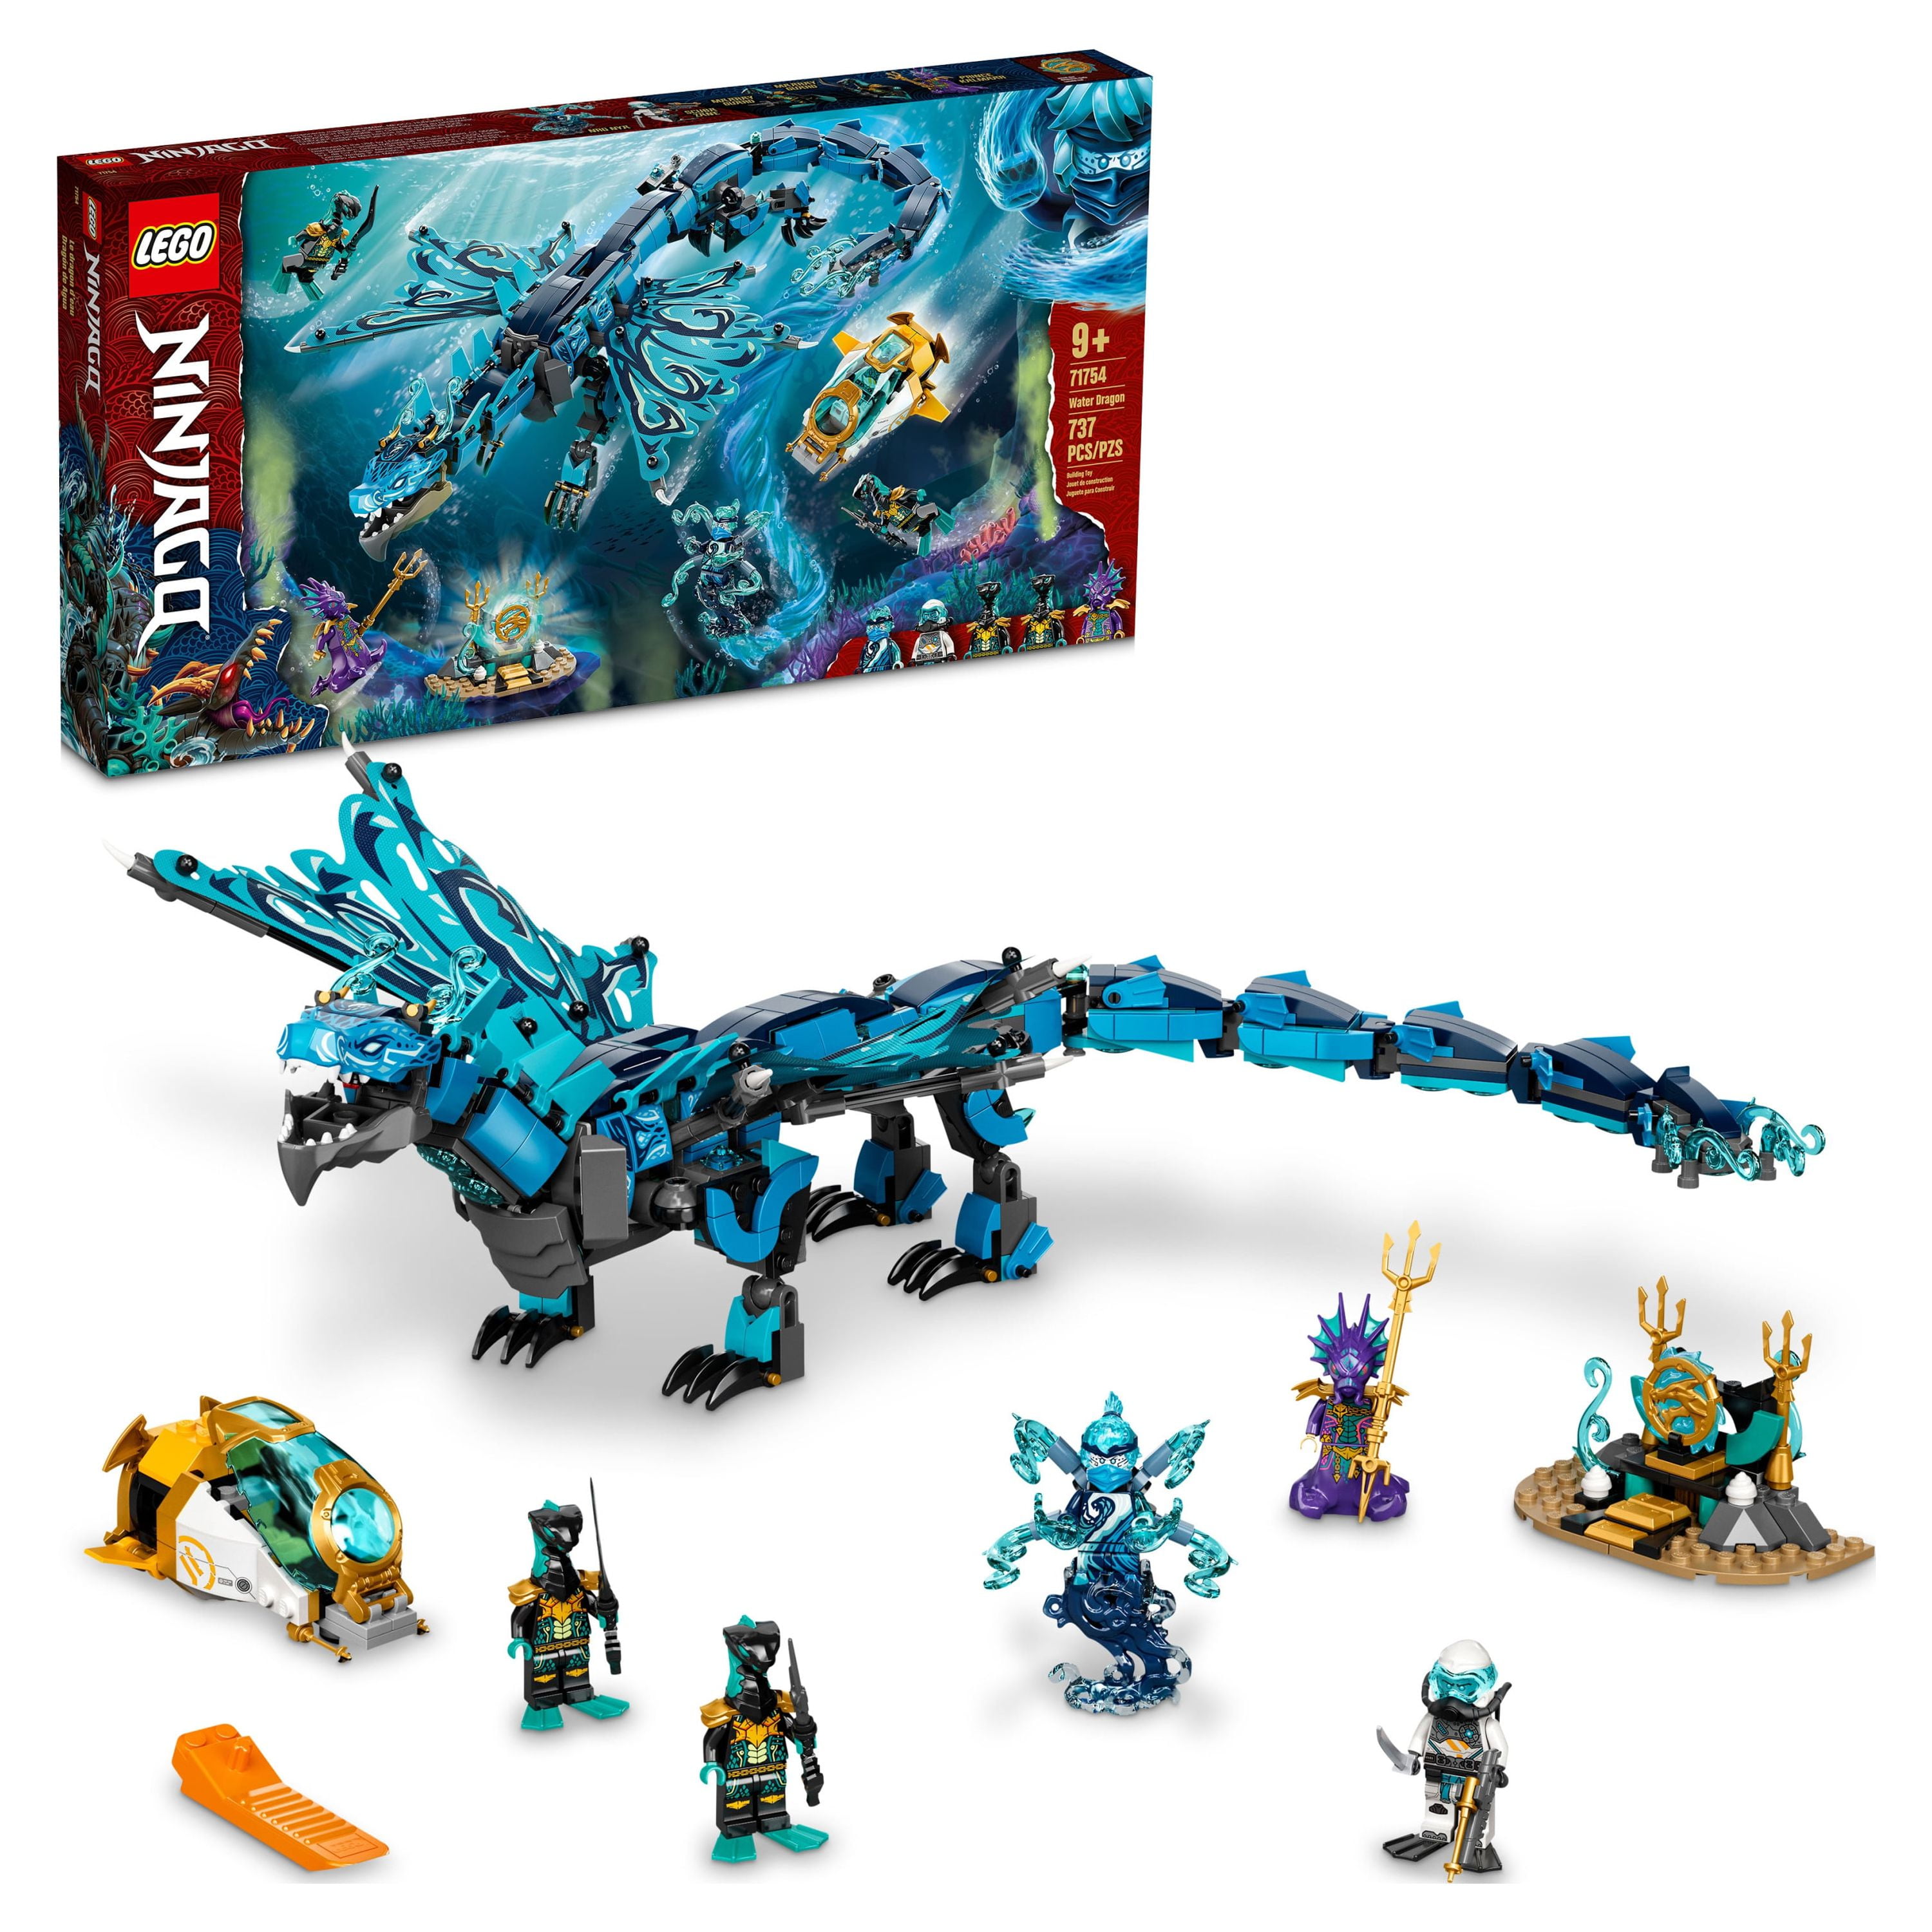 LEGO NINJAGO Water Dragon Toy, 71754 Building Set with 5